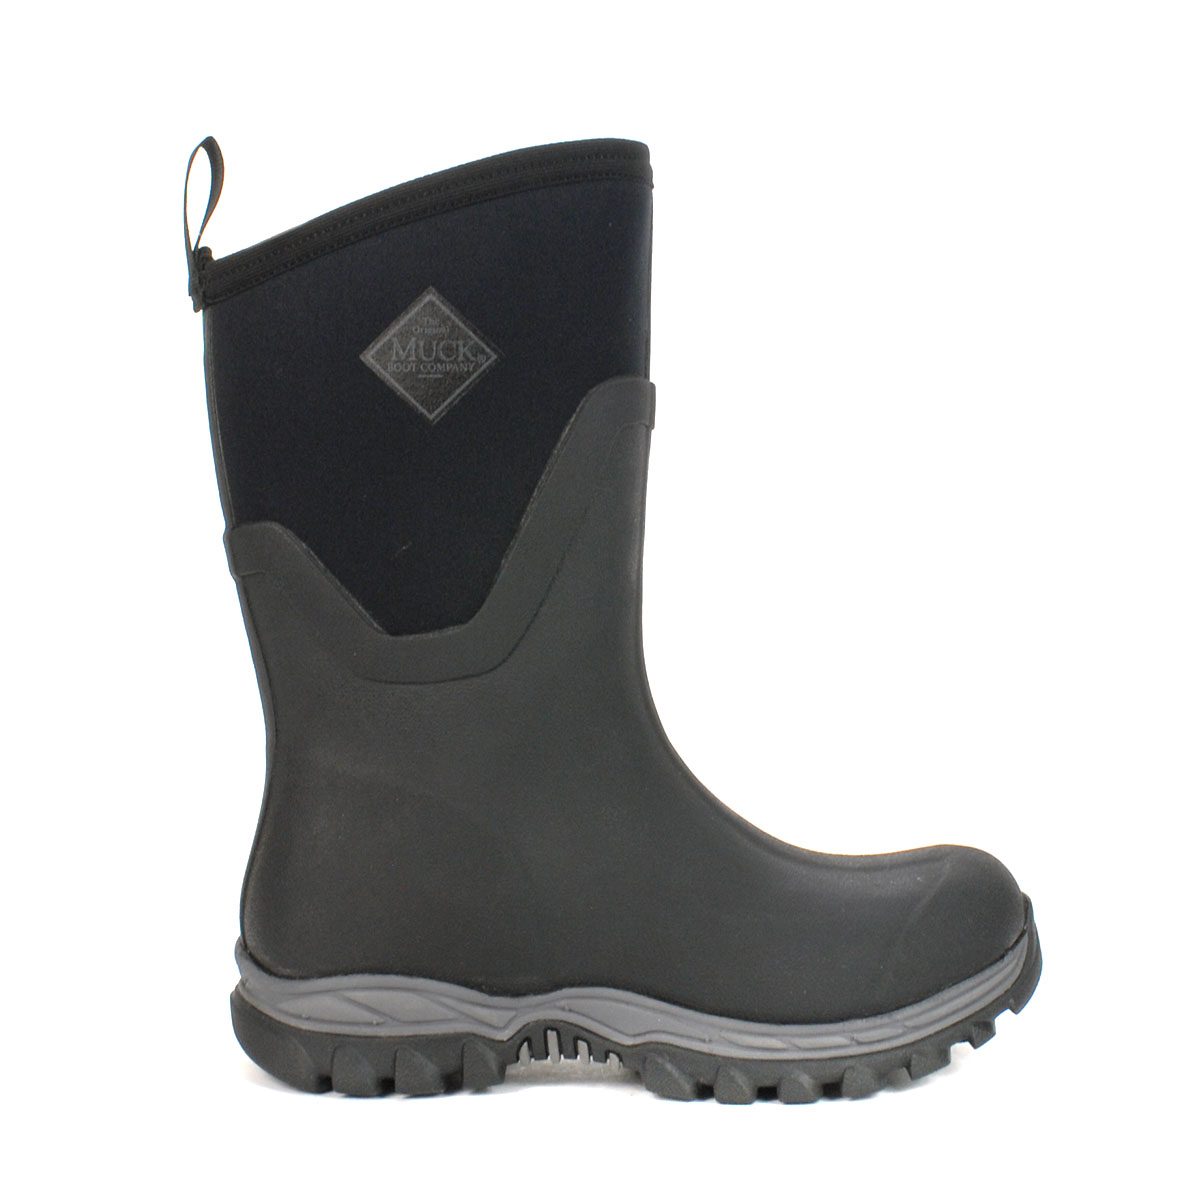 Muck Boots Women's Arctic Sport Mid Black Rubber Rain/Winter Boots